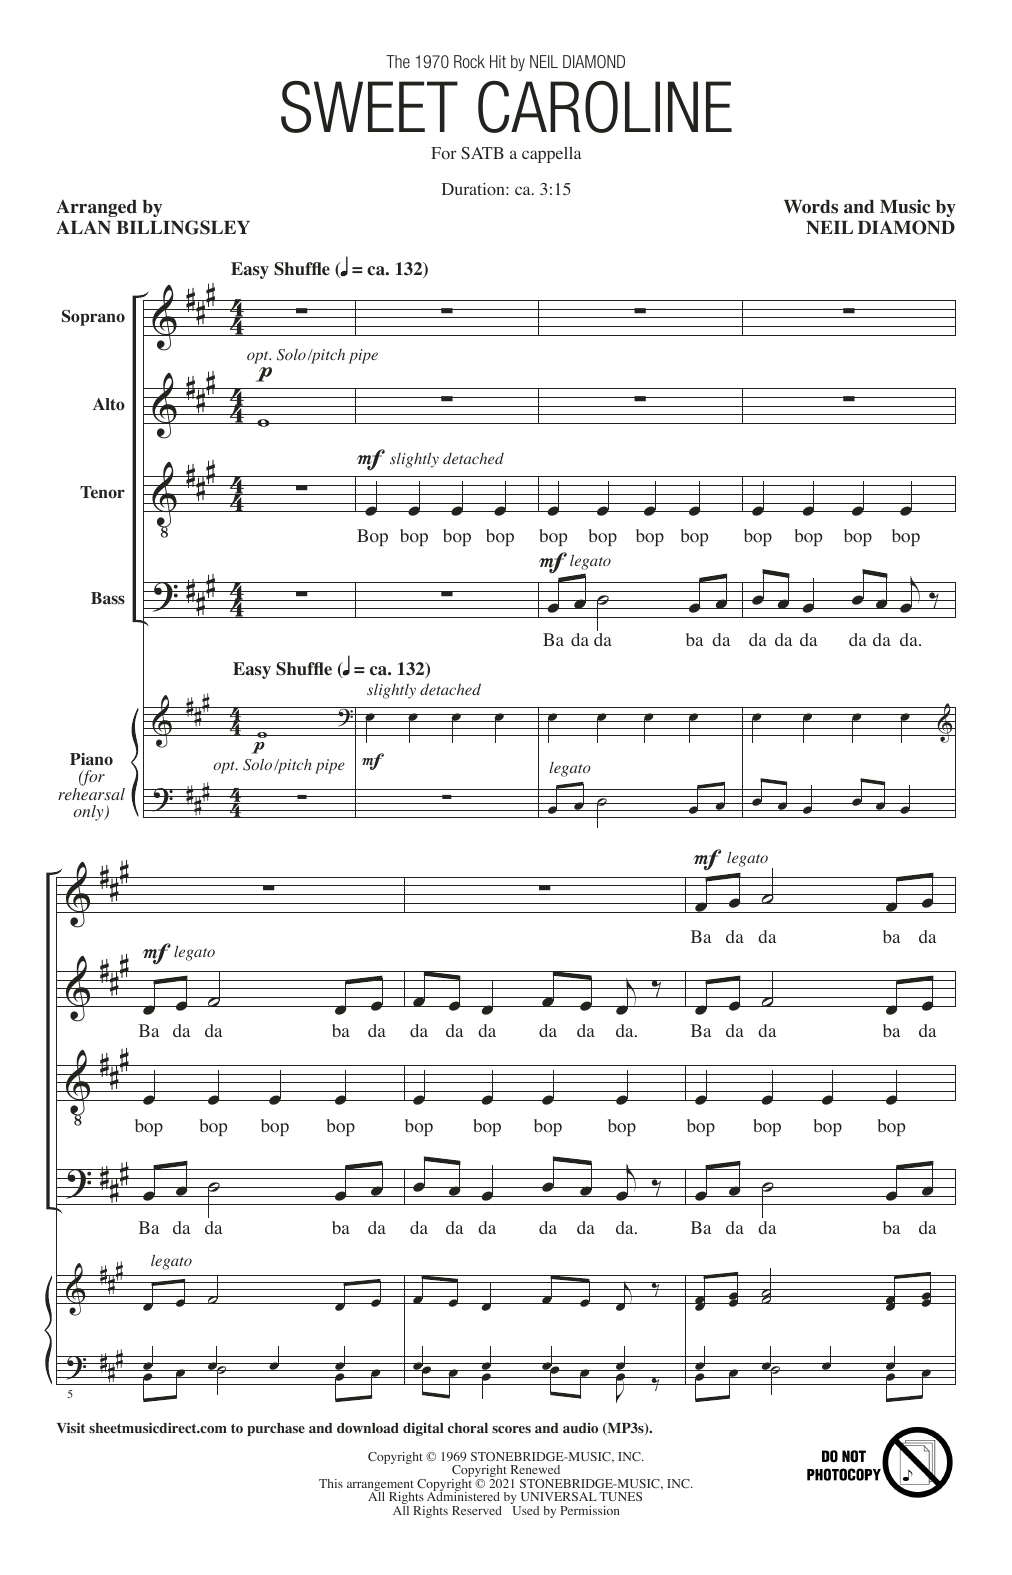 Neil Diamond Sweet Caroline (arr. Alan Billingsley) Sheet Music Notes & Chords for SATB Choir - Download or Print PDF